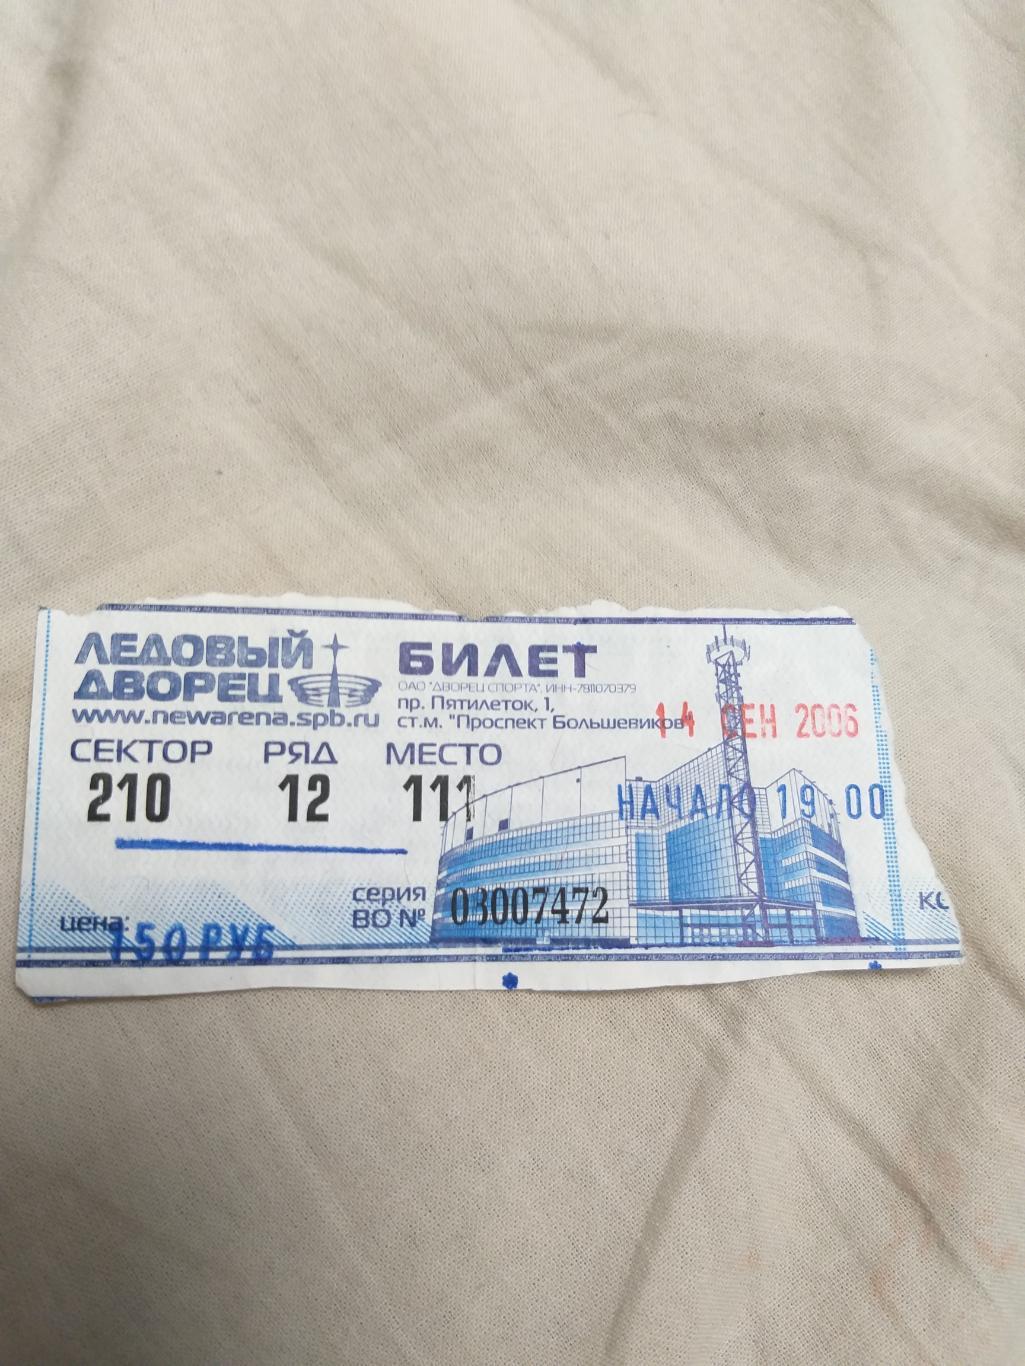 СКА(Санкт-Петербург)-ЦСКА 14.09.2006 билет